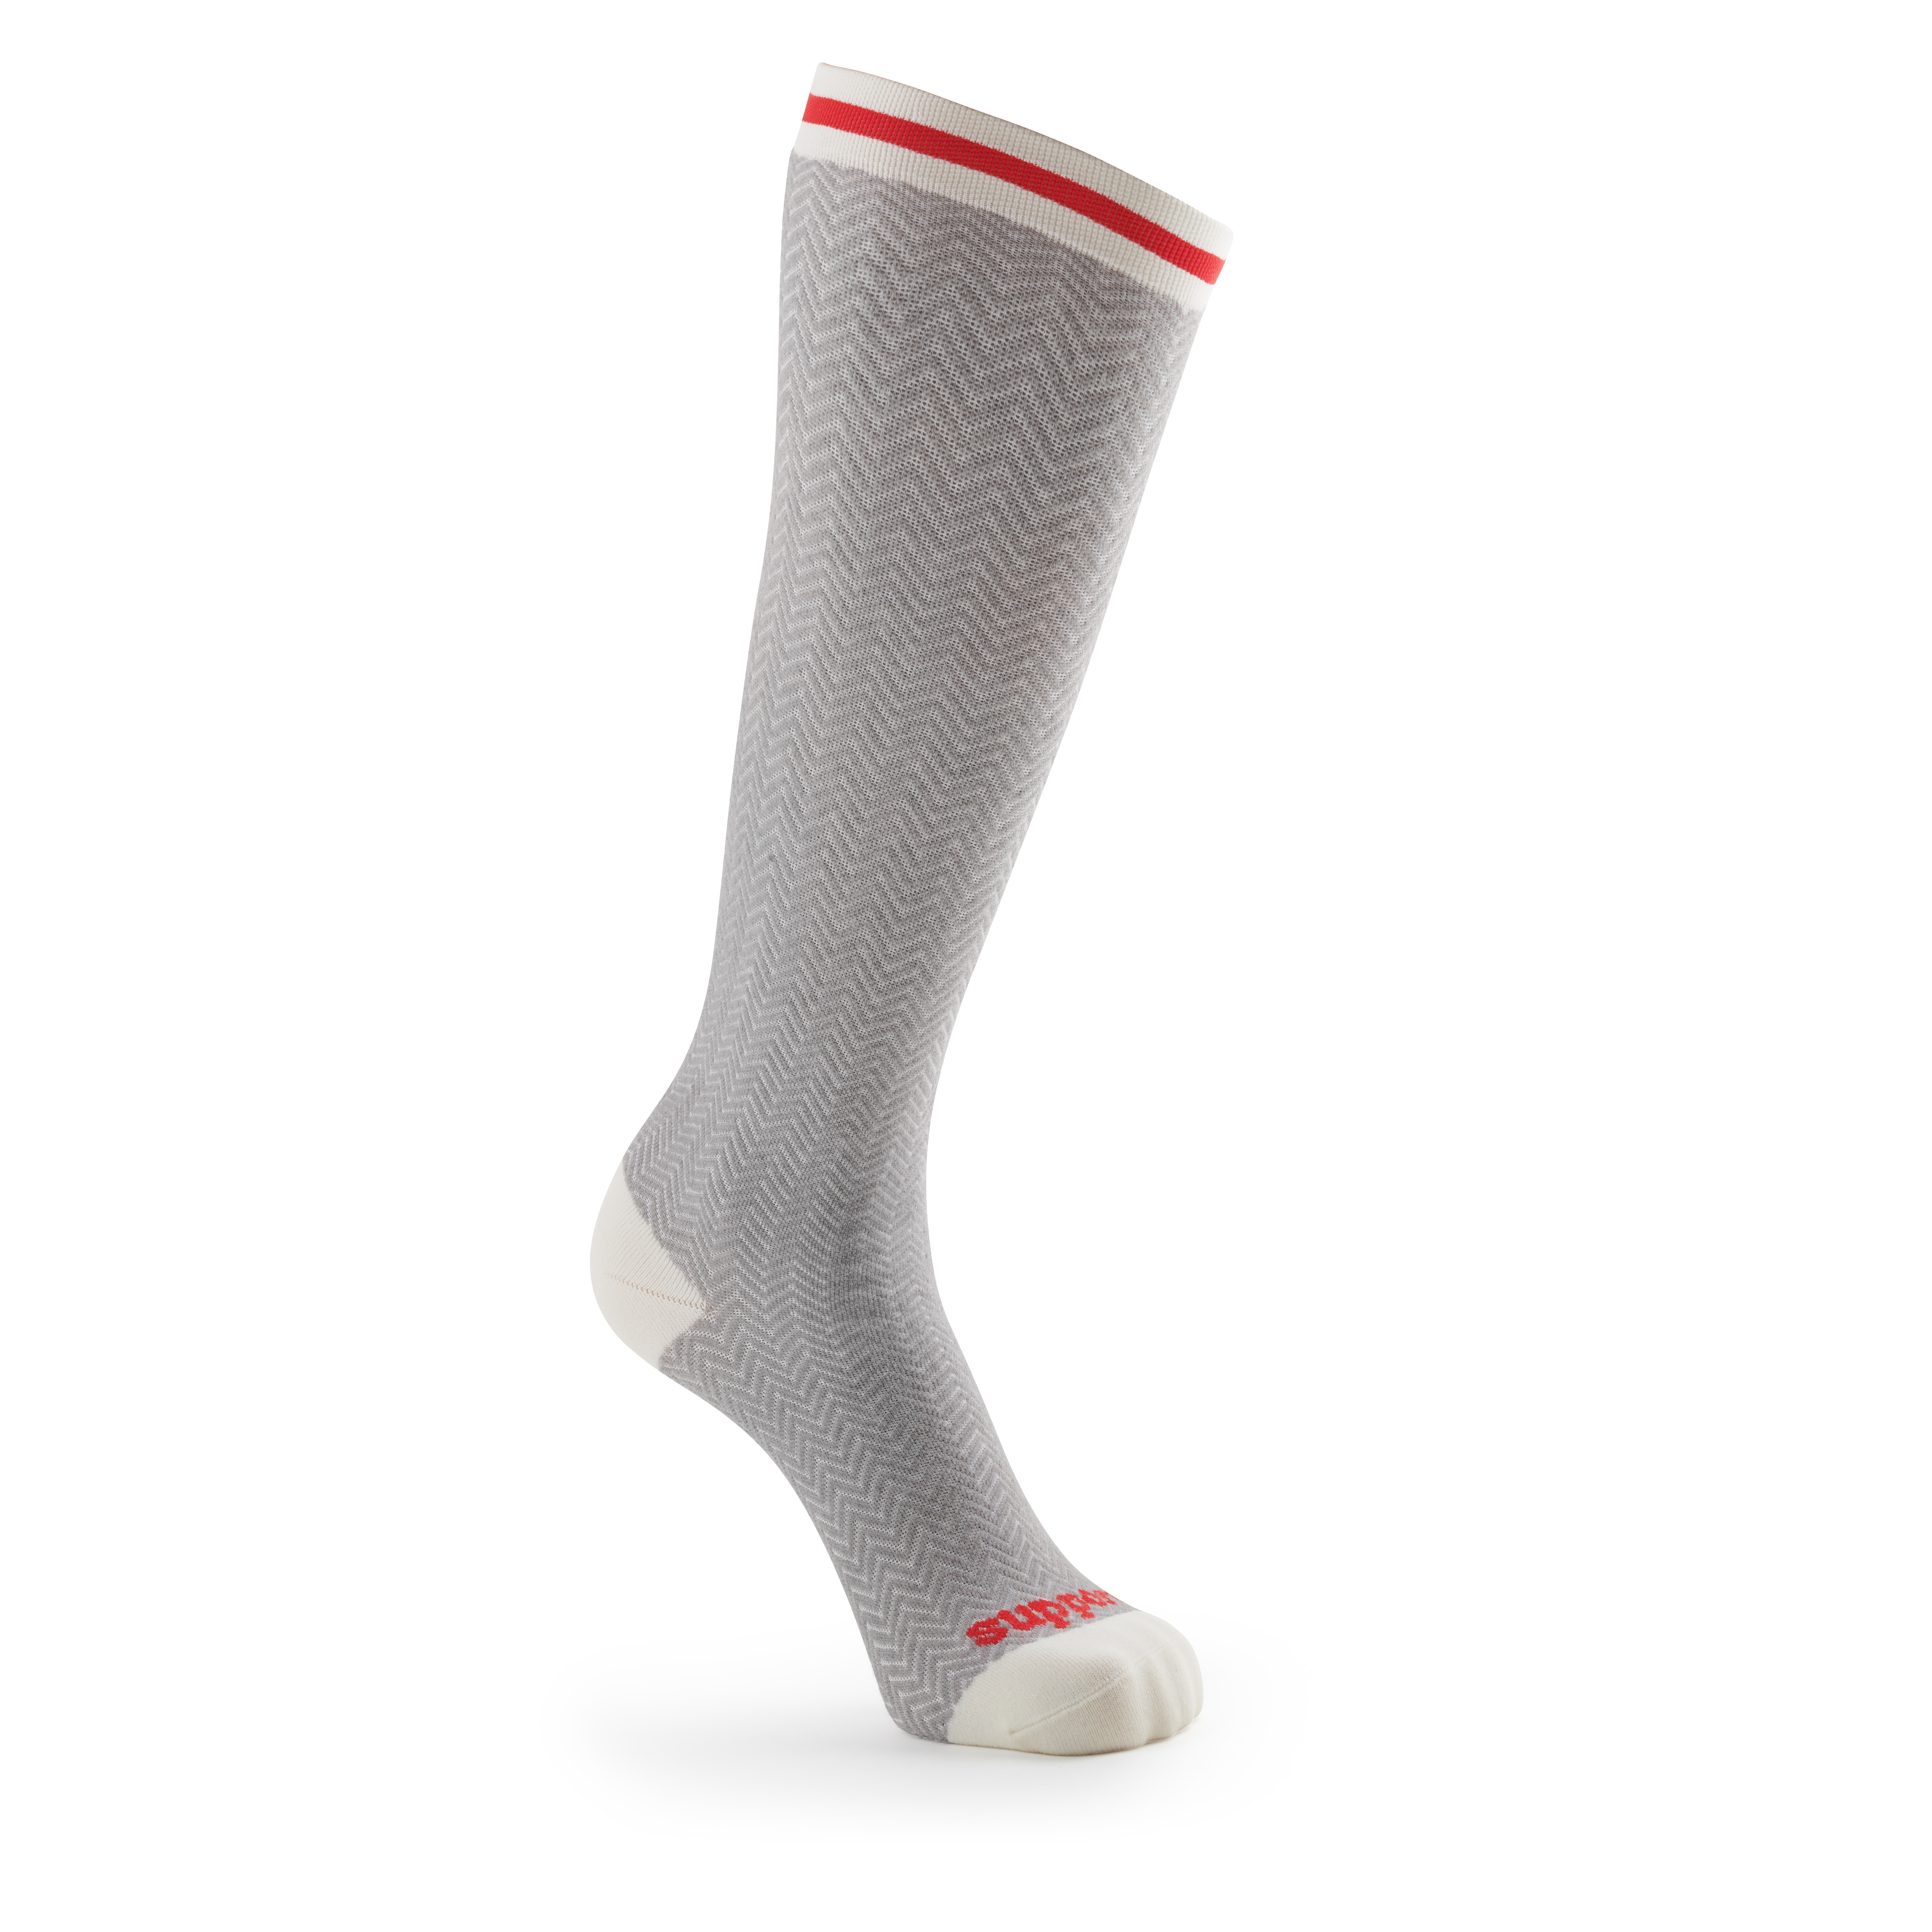 Supporo Thermal Merino Wool Unisex Compression Socks